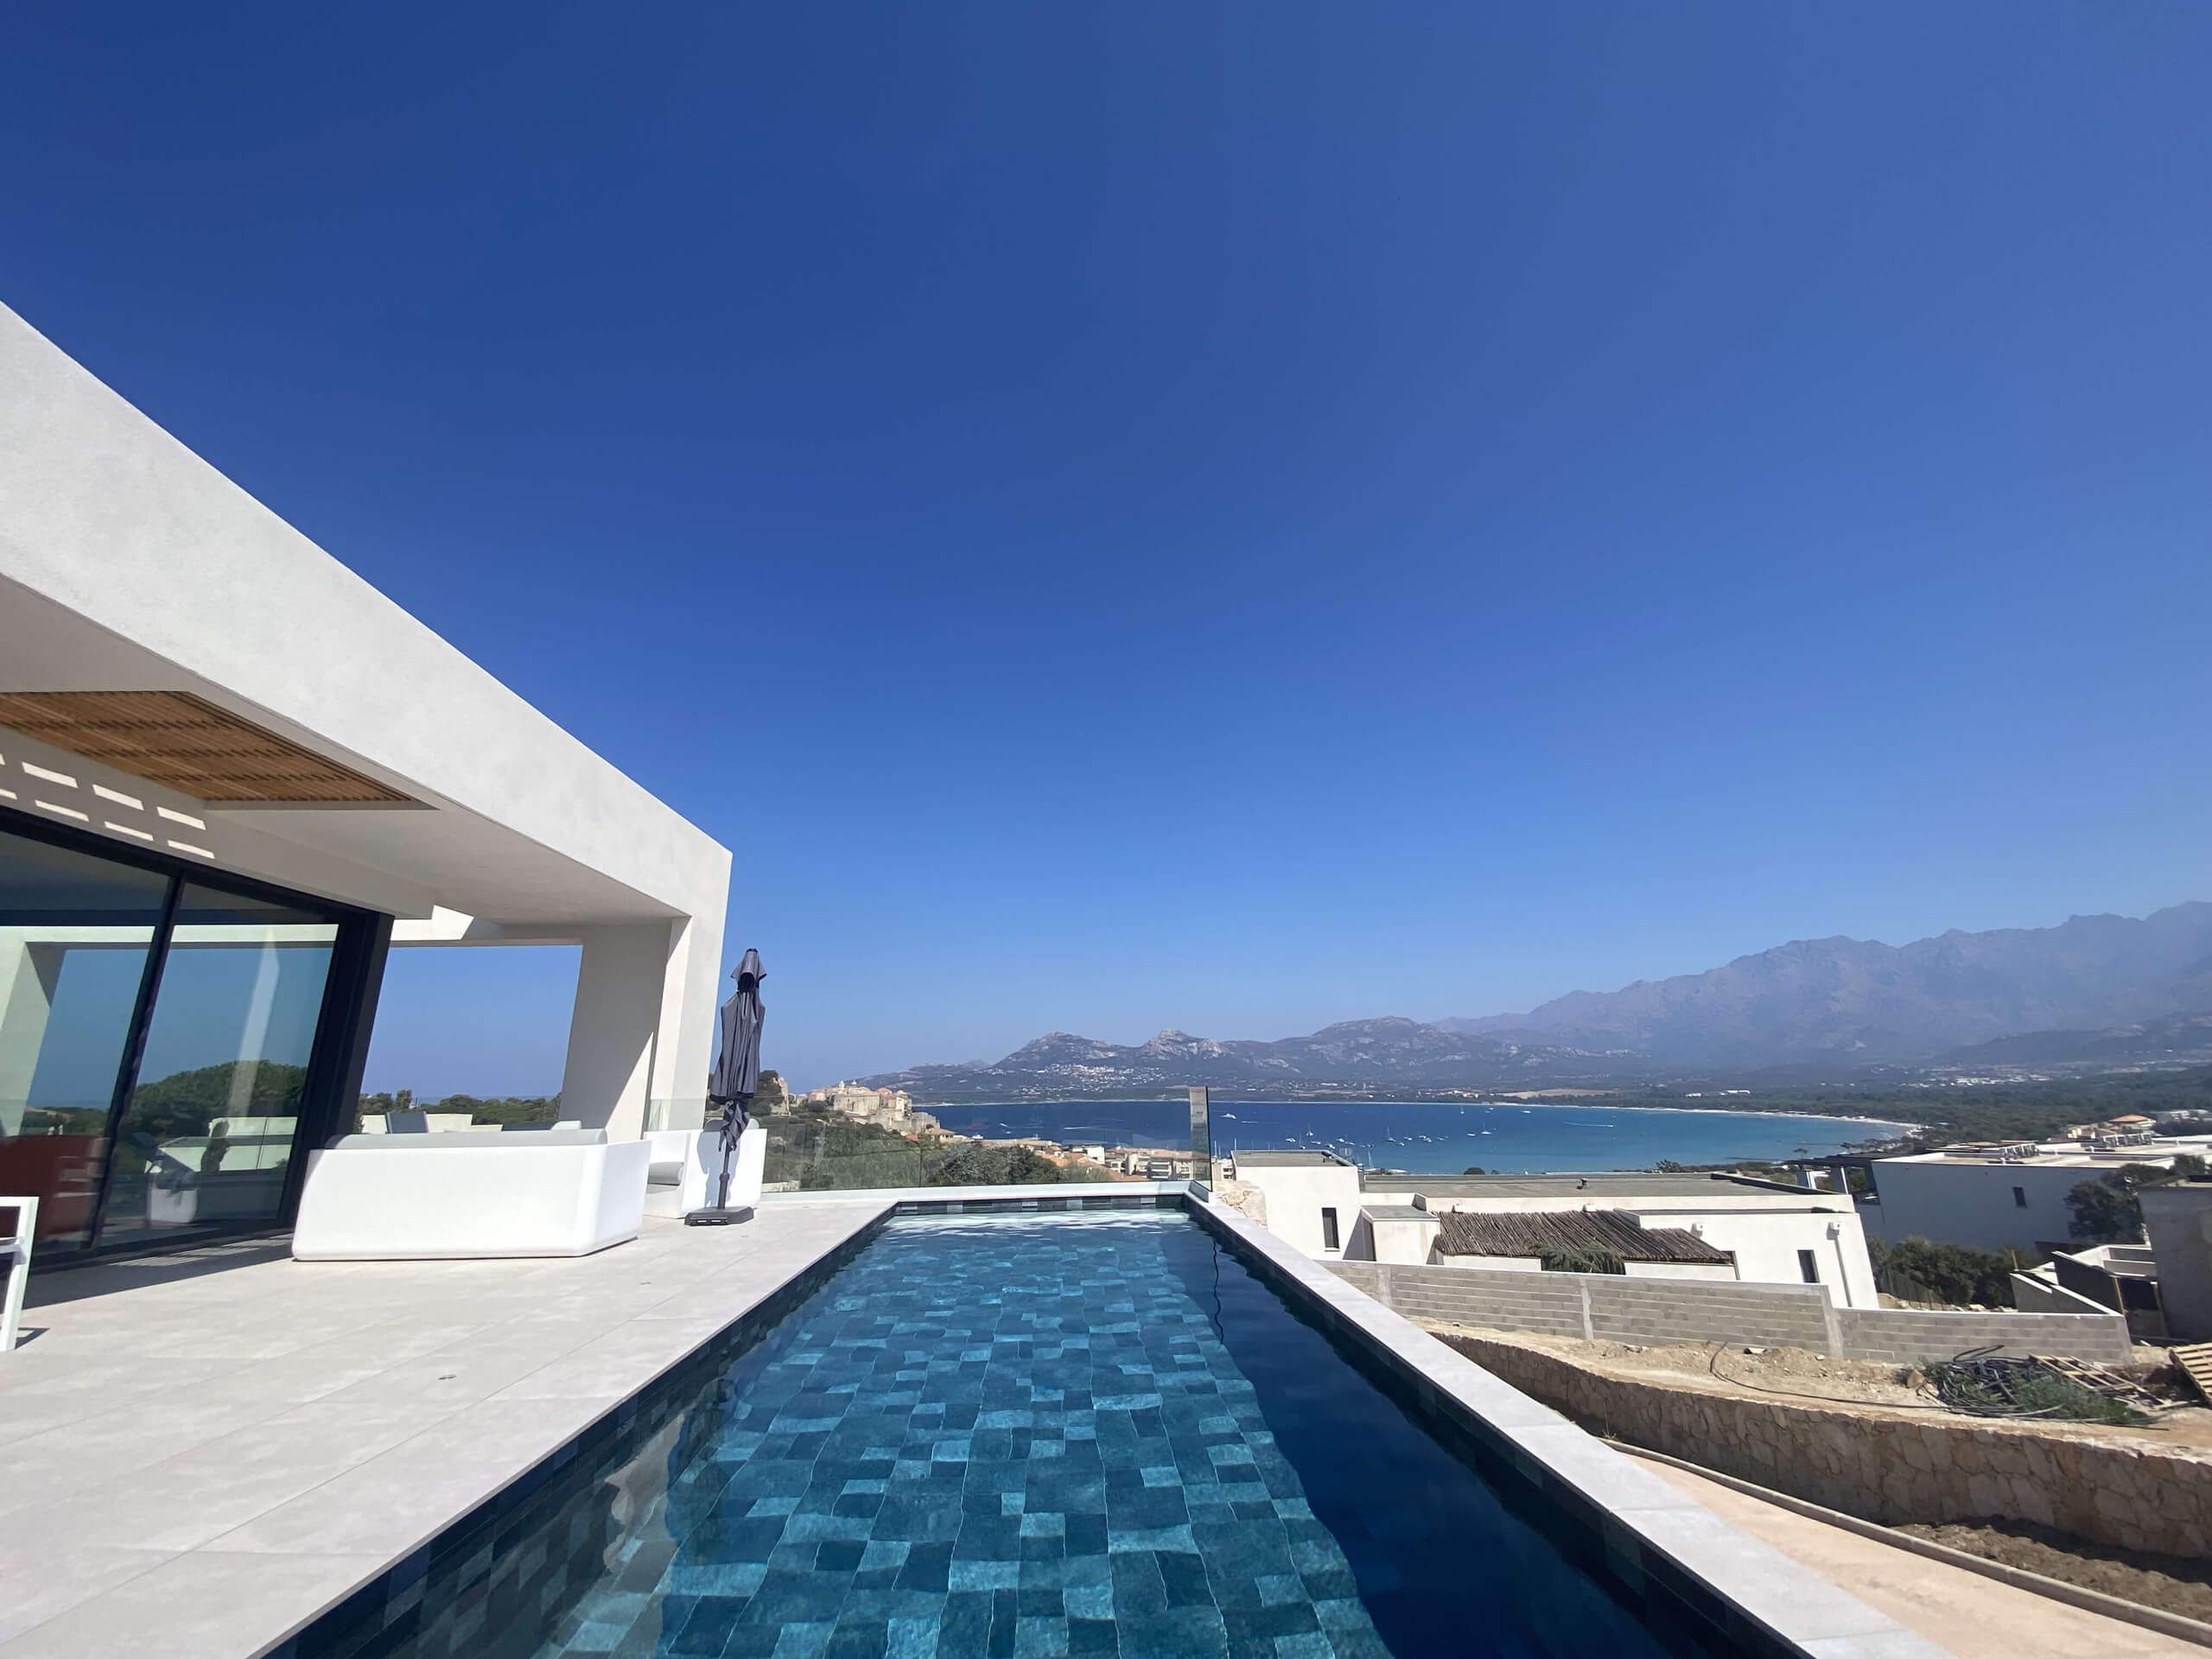 Villa Mare Monti - La piscine et la vue sur la baie de Calvi